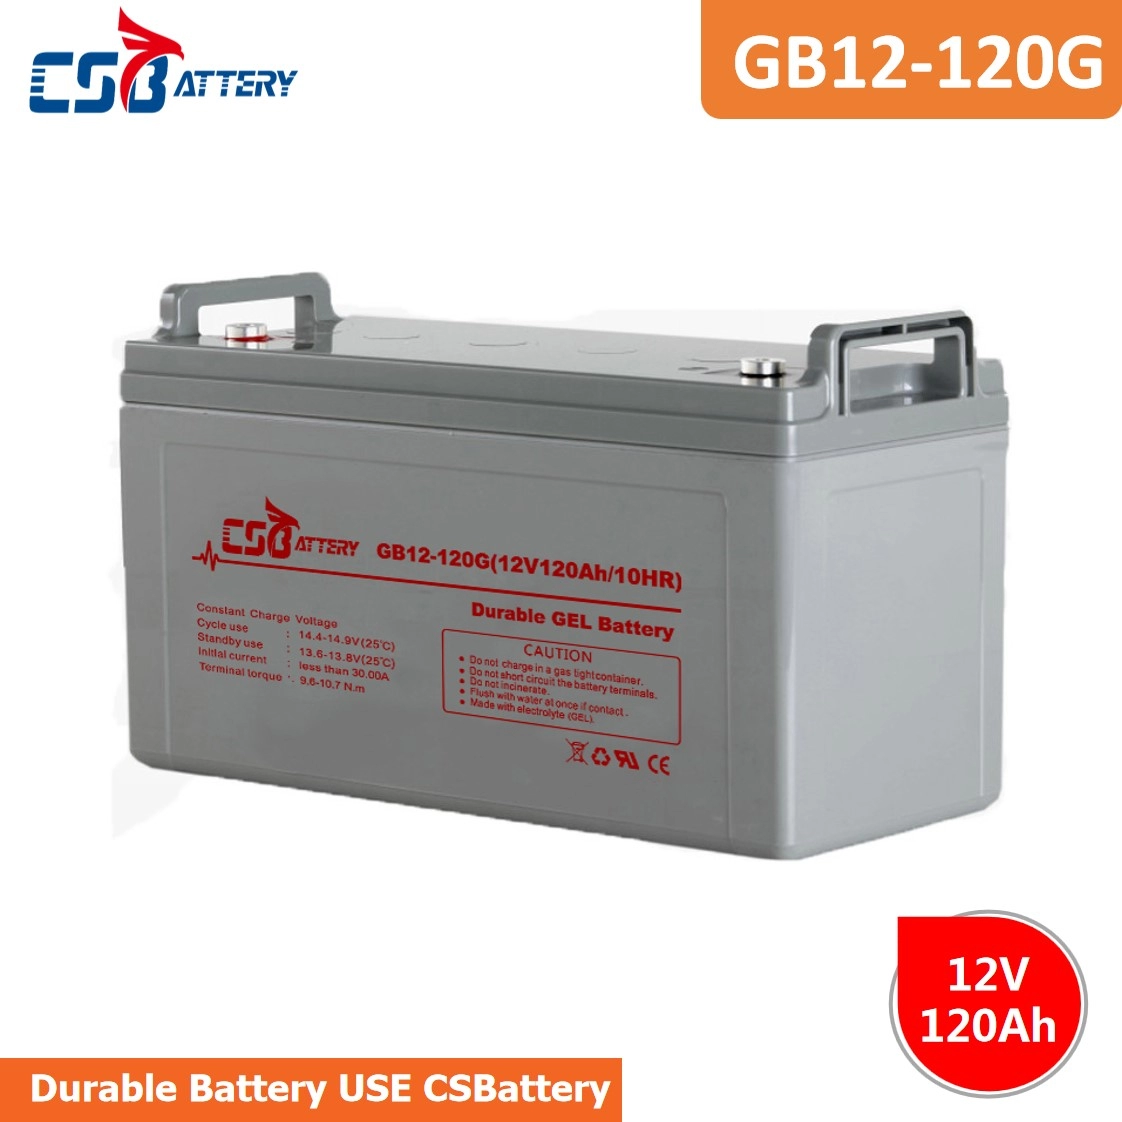 GB12-120G 12V 120Ah Durable Long Life Gel Battery